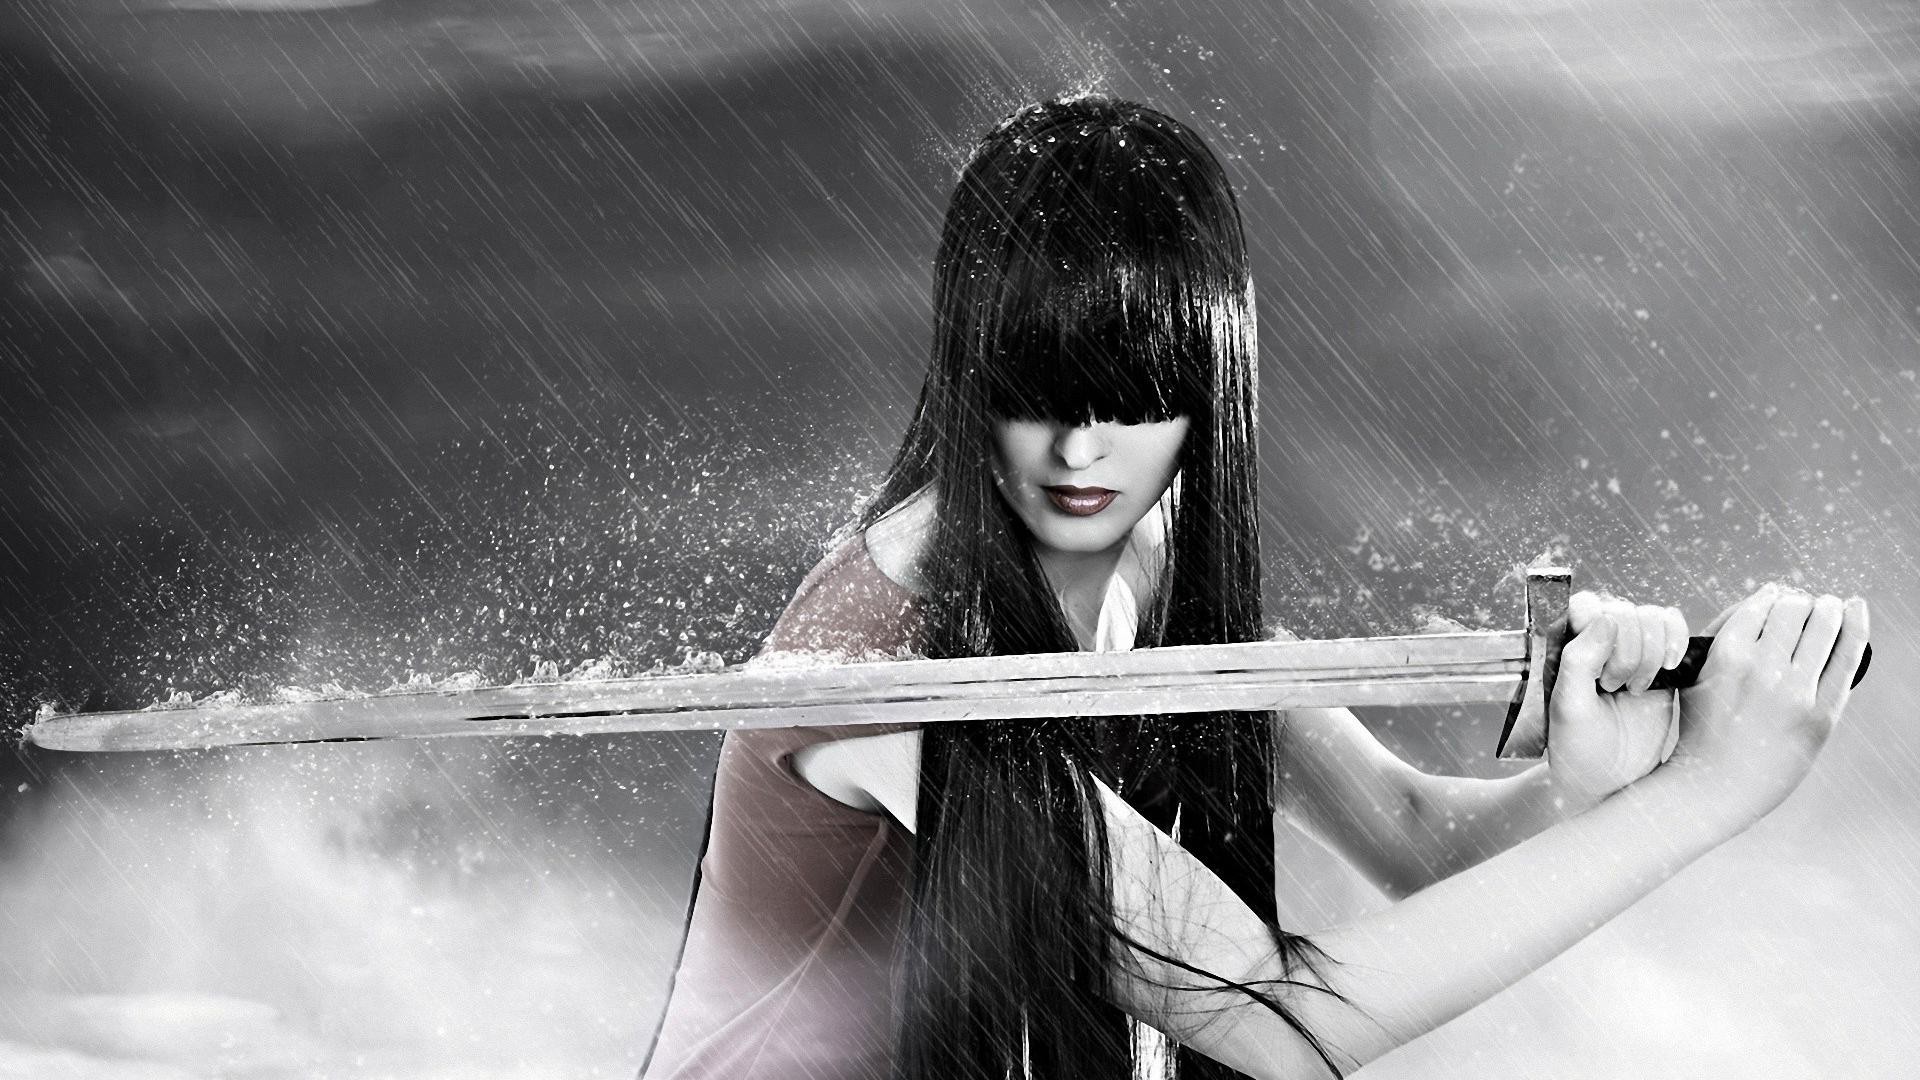 General 1920x1080 women sword rain bangs warrior long hair model fantasy girl samurai women with swords weapon hair covering eyes selective coloring